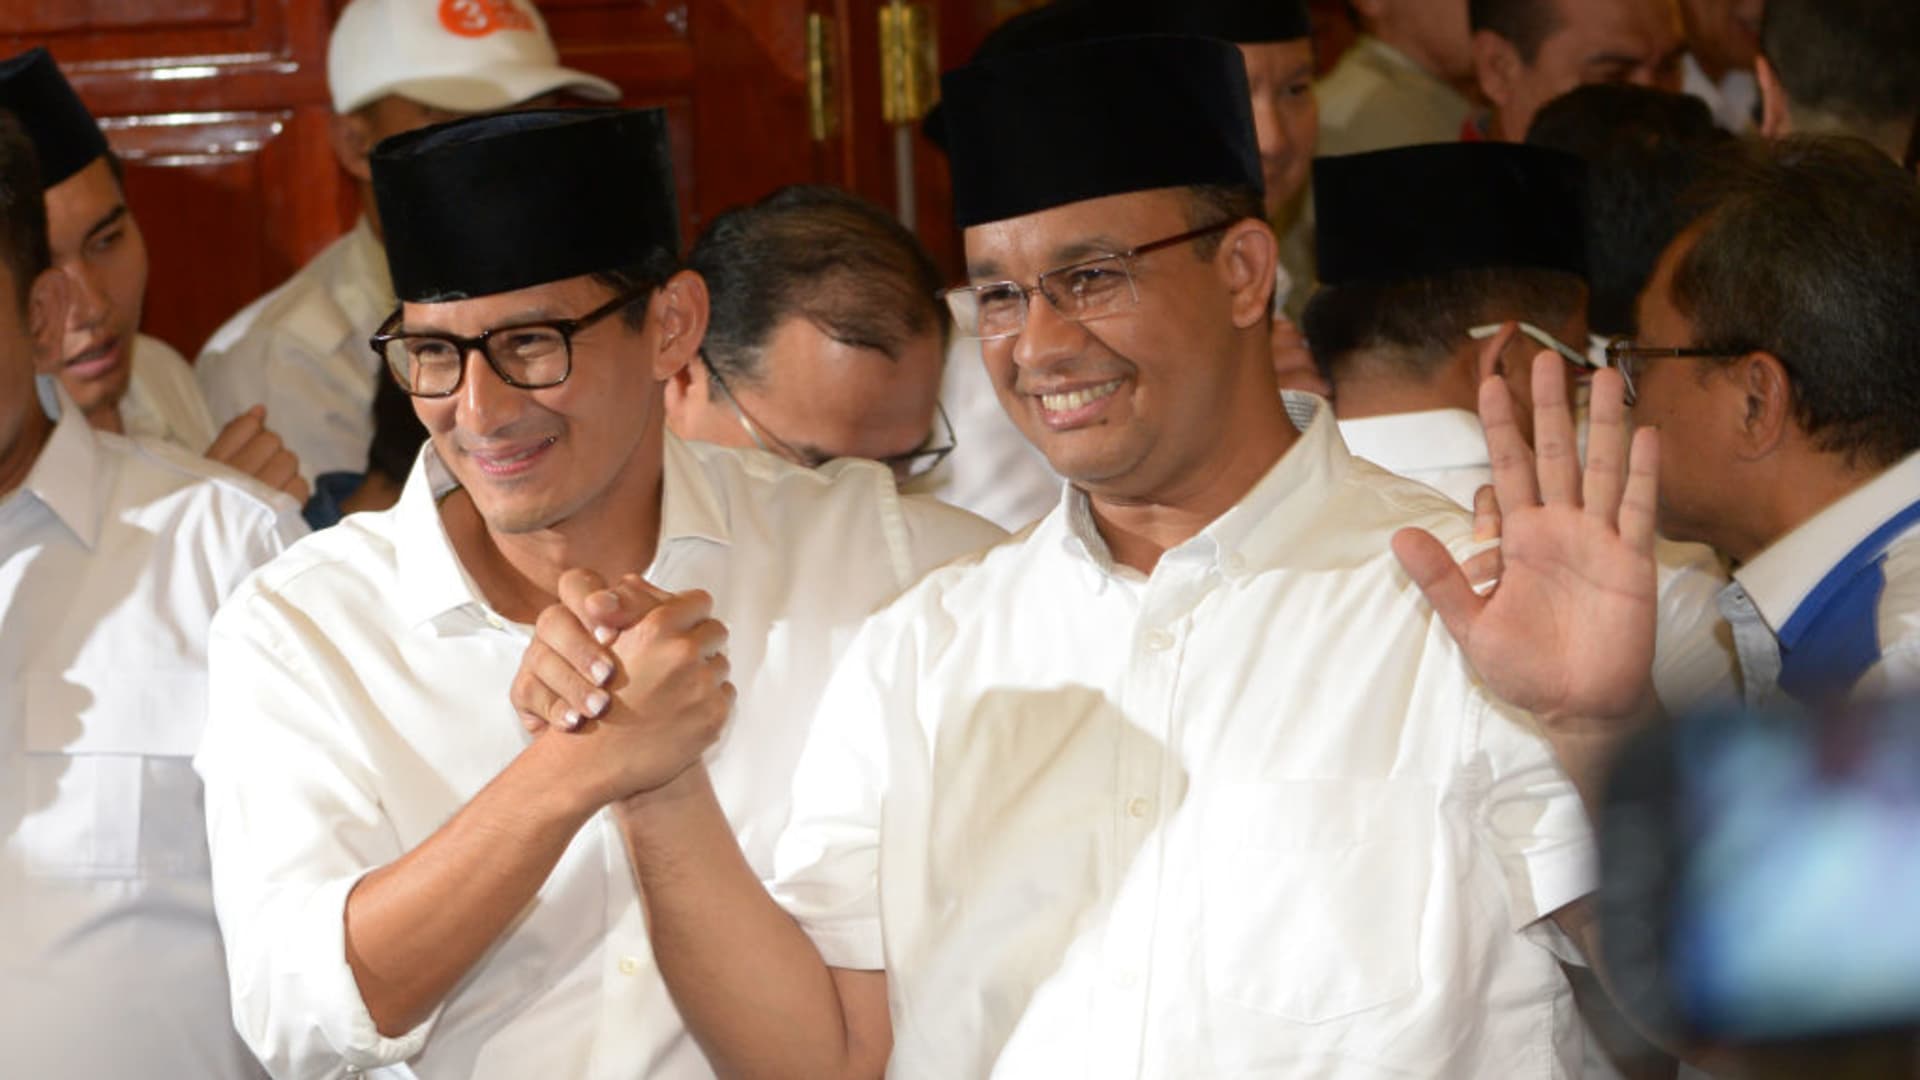 Multi-millionaire entrepreneur to Indonesia minister